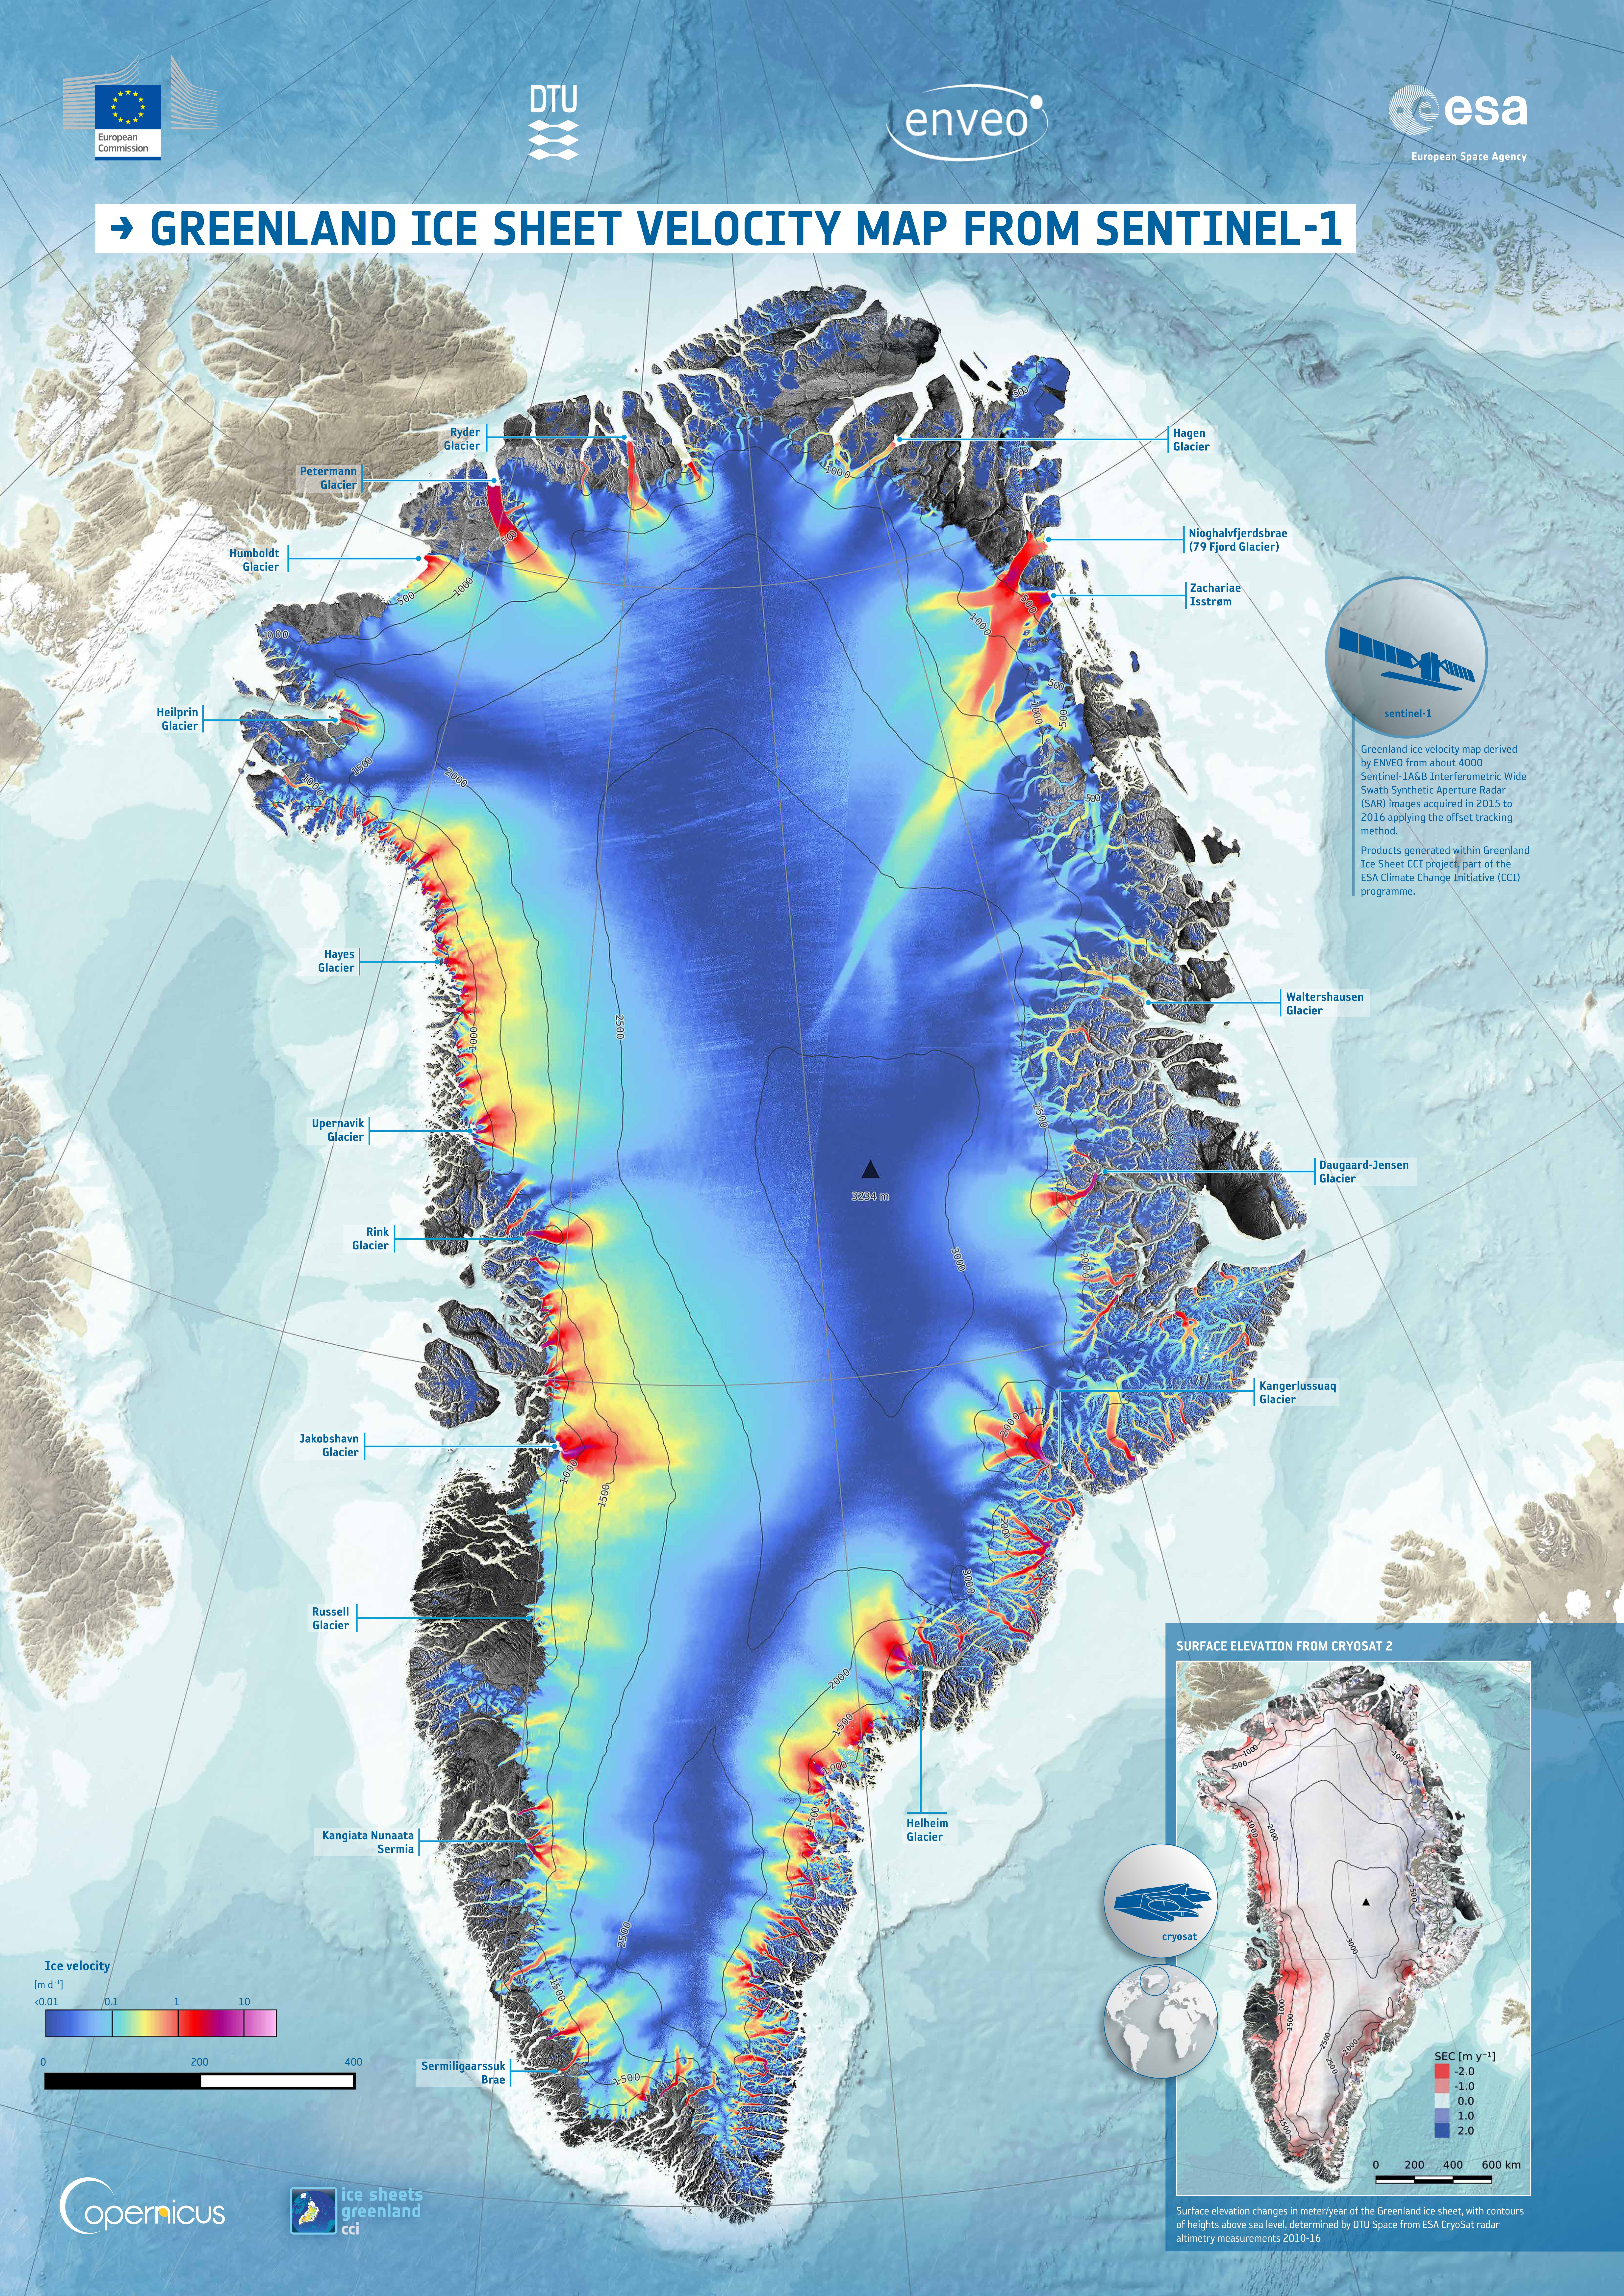 Greenland ice sheet velocity map from Sentinel-1 satellite